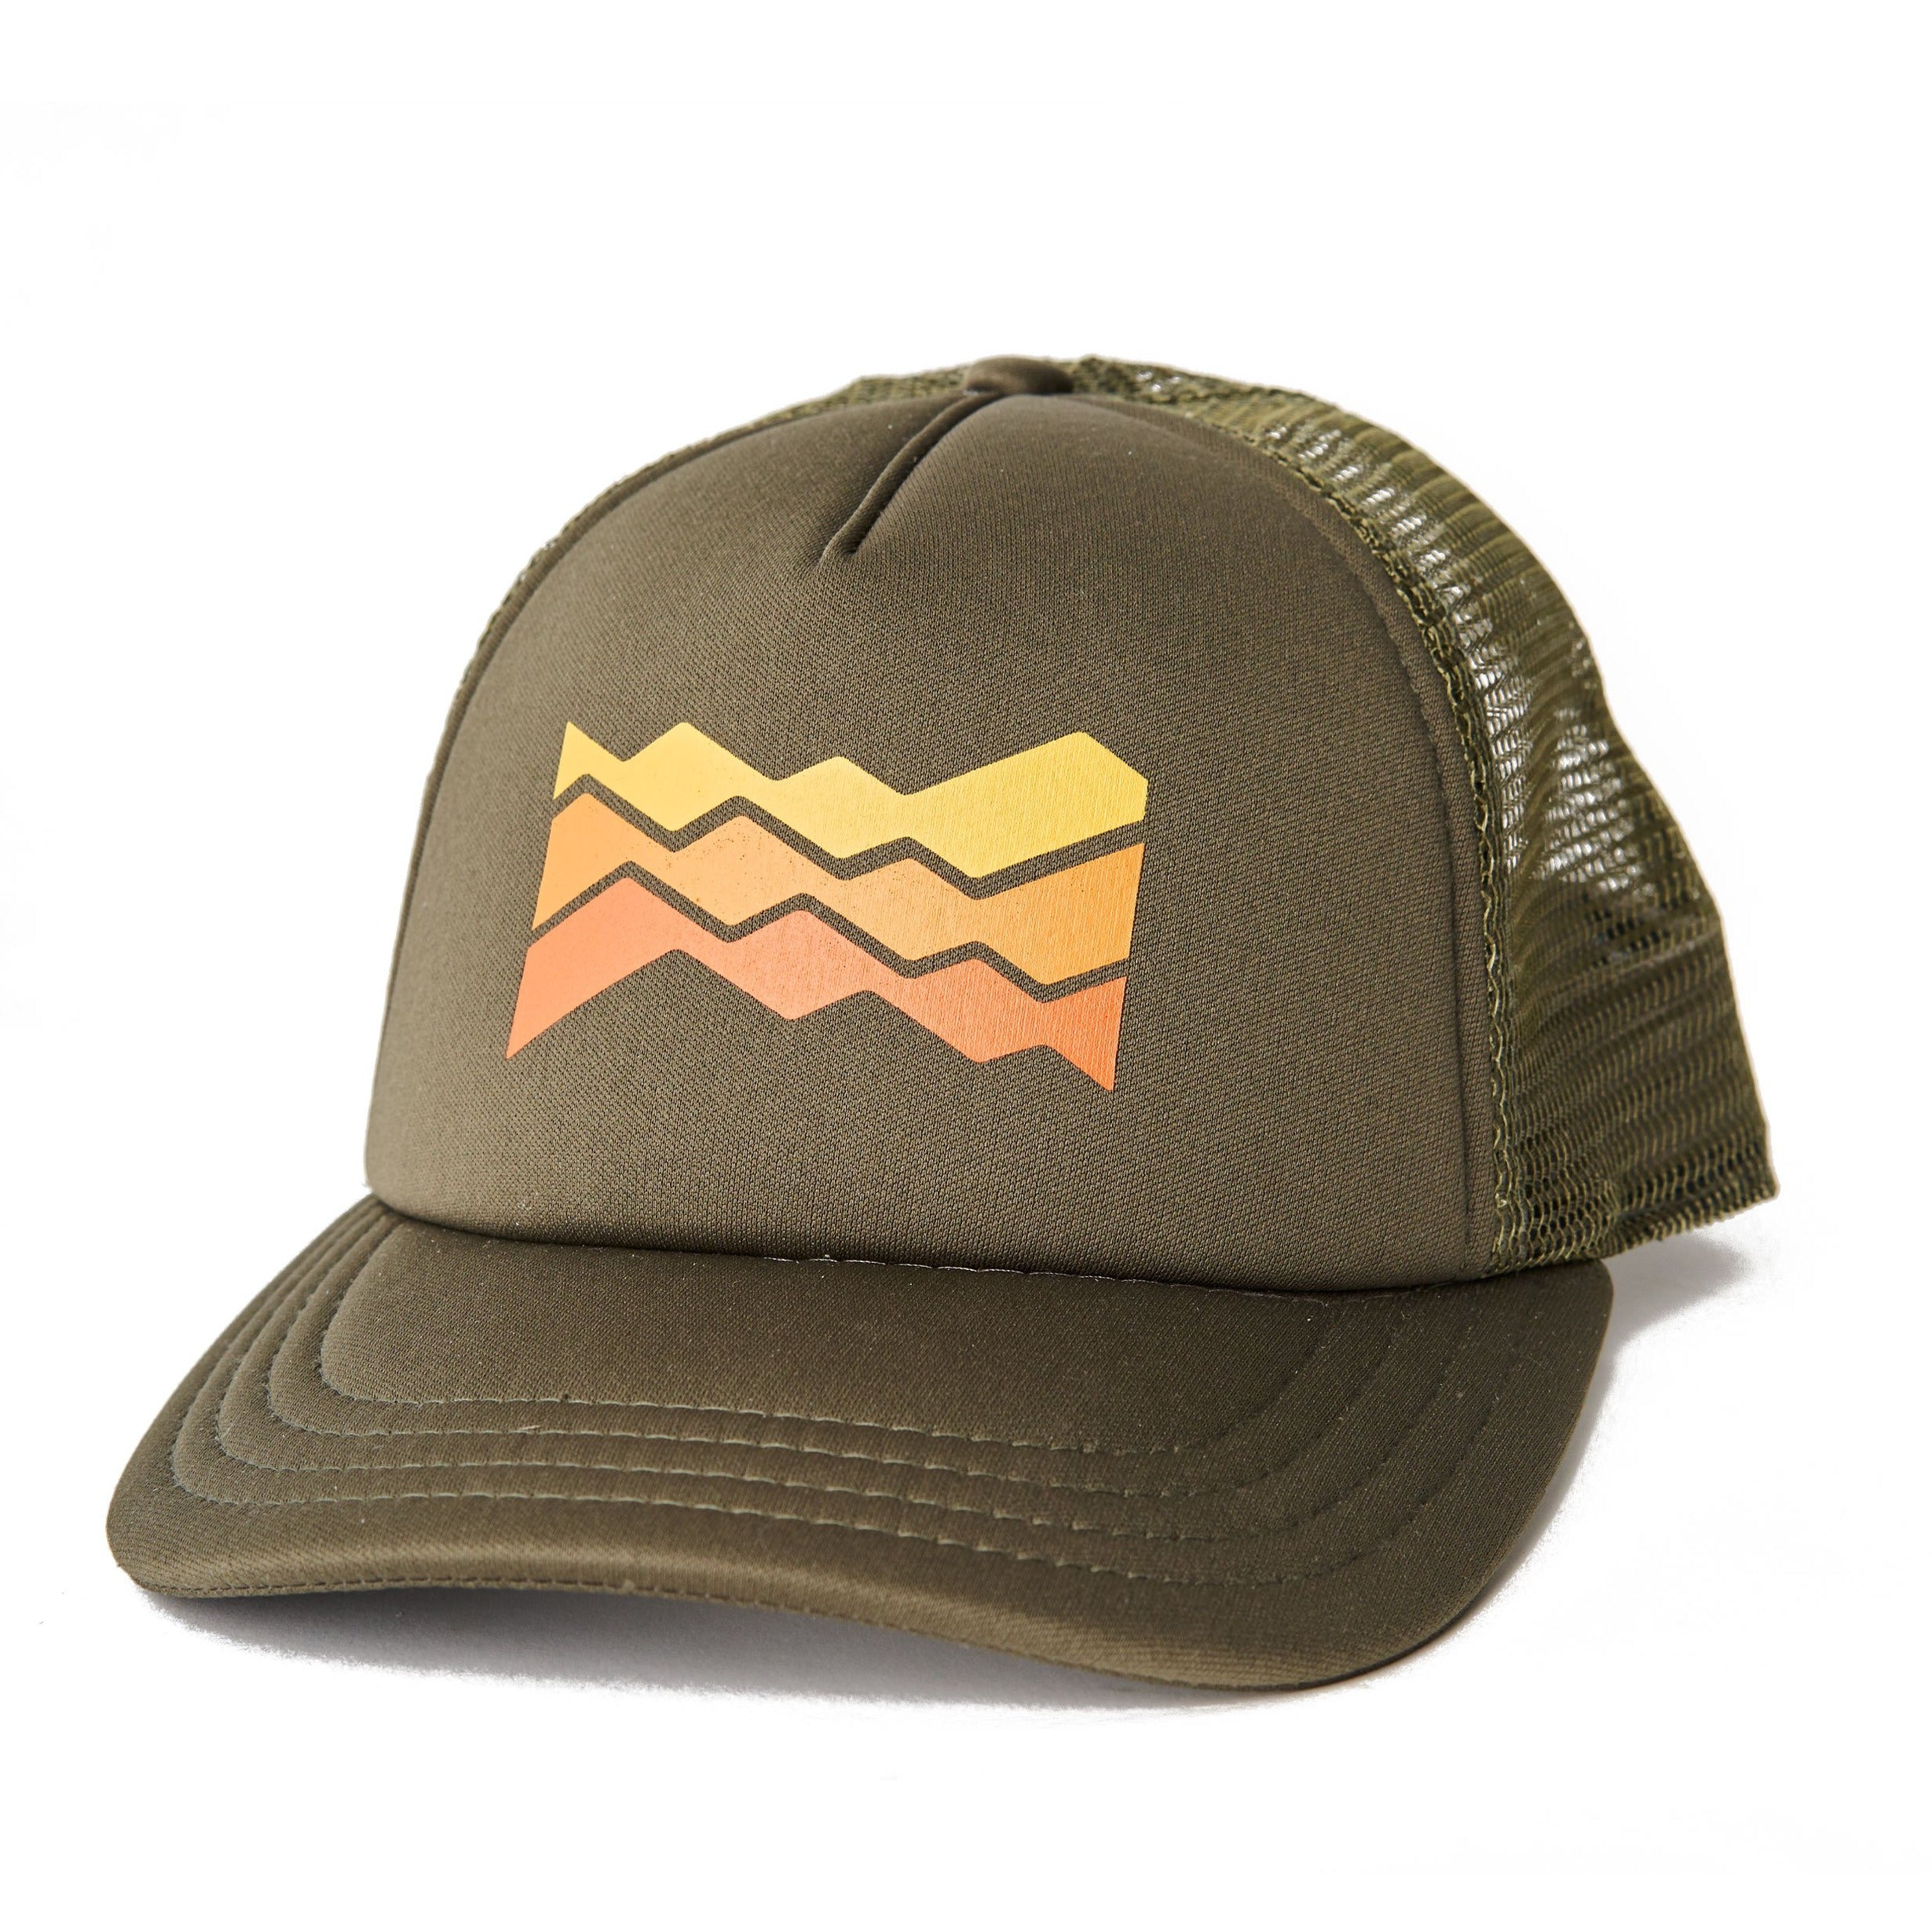 BRN Ridgeline Trucker Hat